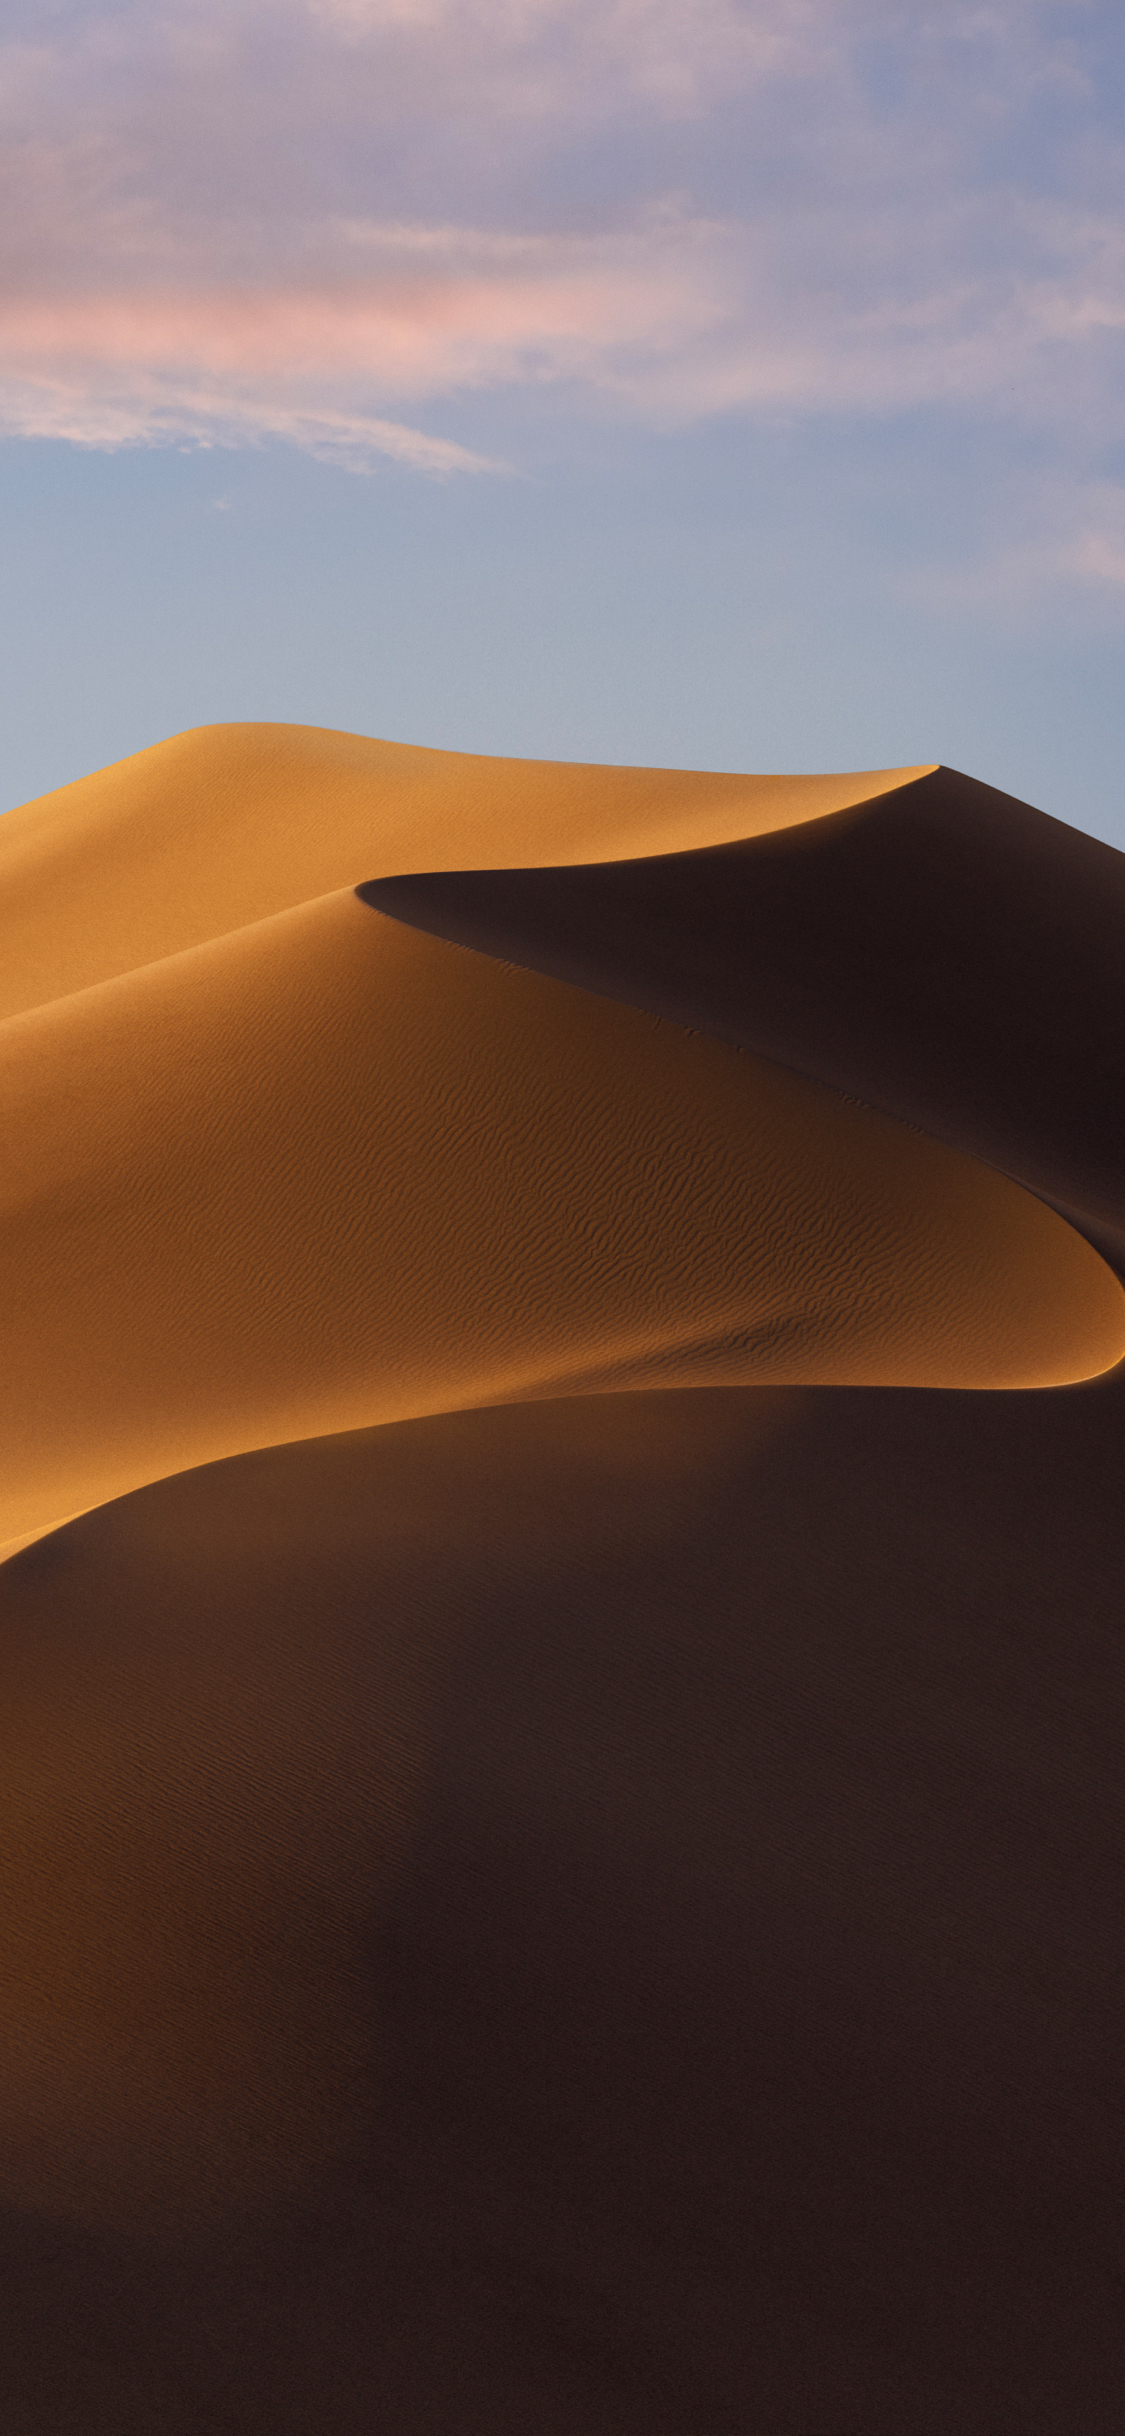 mac wallpaper for iphone,desert,erg,sand,aeolian landform,natural environment